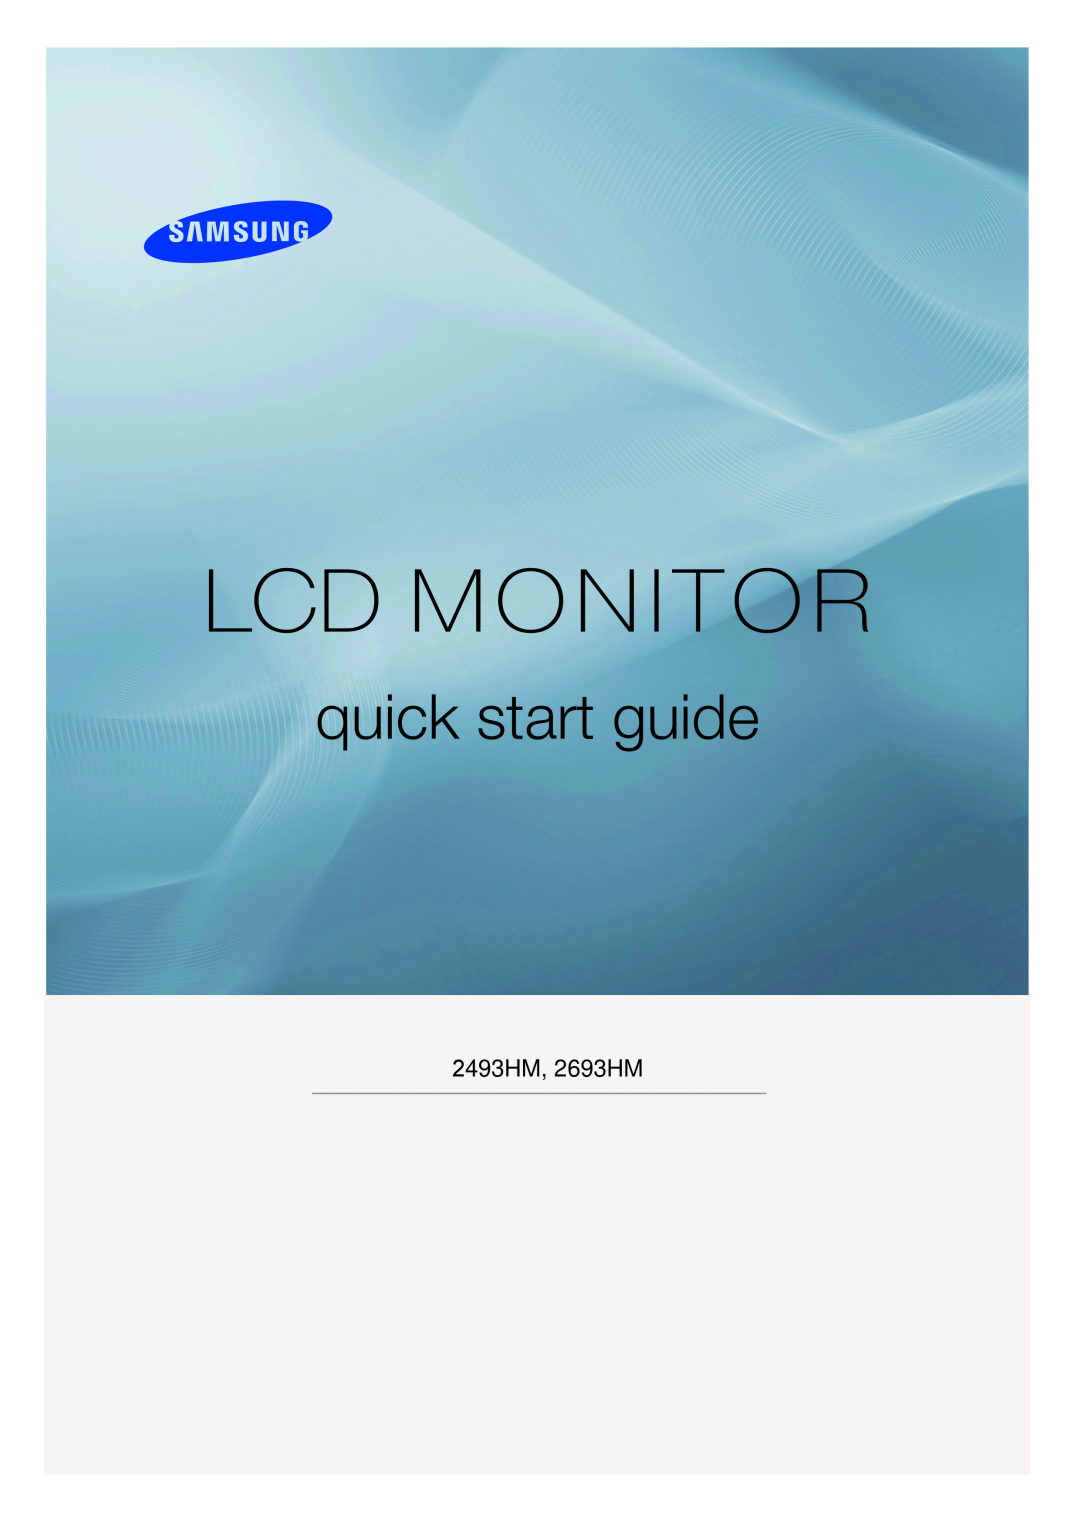 Samsung LS24KIERBQ/EDC, LS24KIEEFV/EDC manual SyncMaster 2693HM/2493HM, LCD Монитор, Ръководство за потребителя 